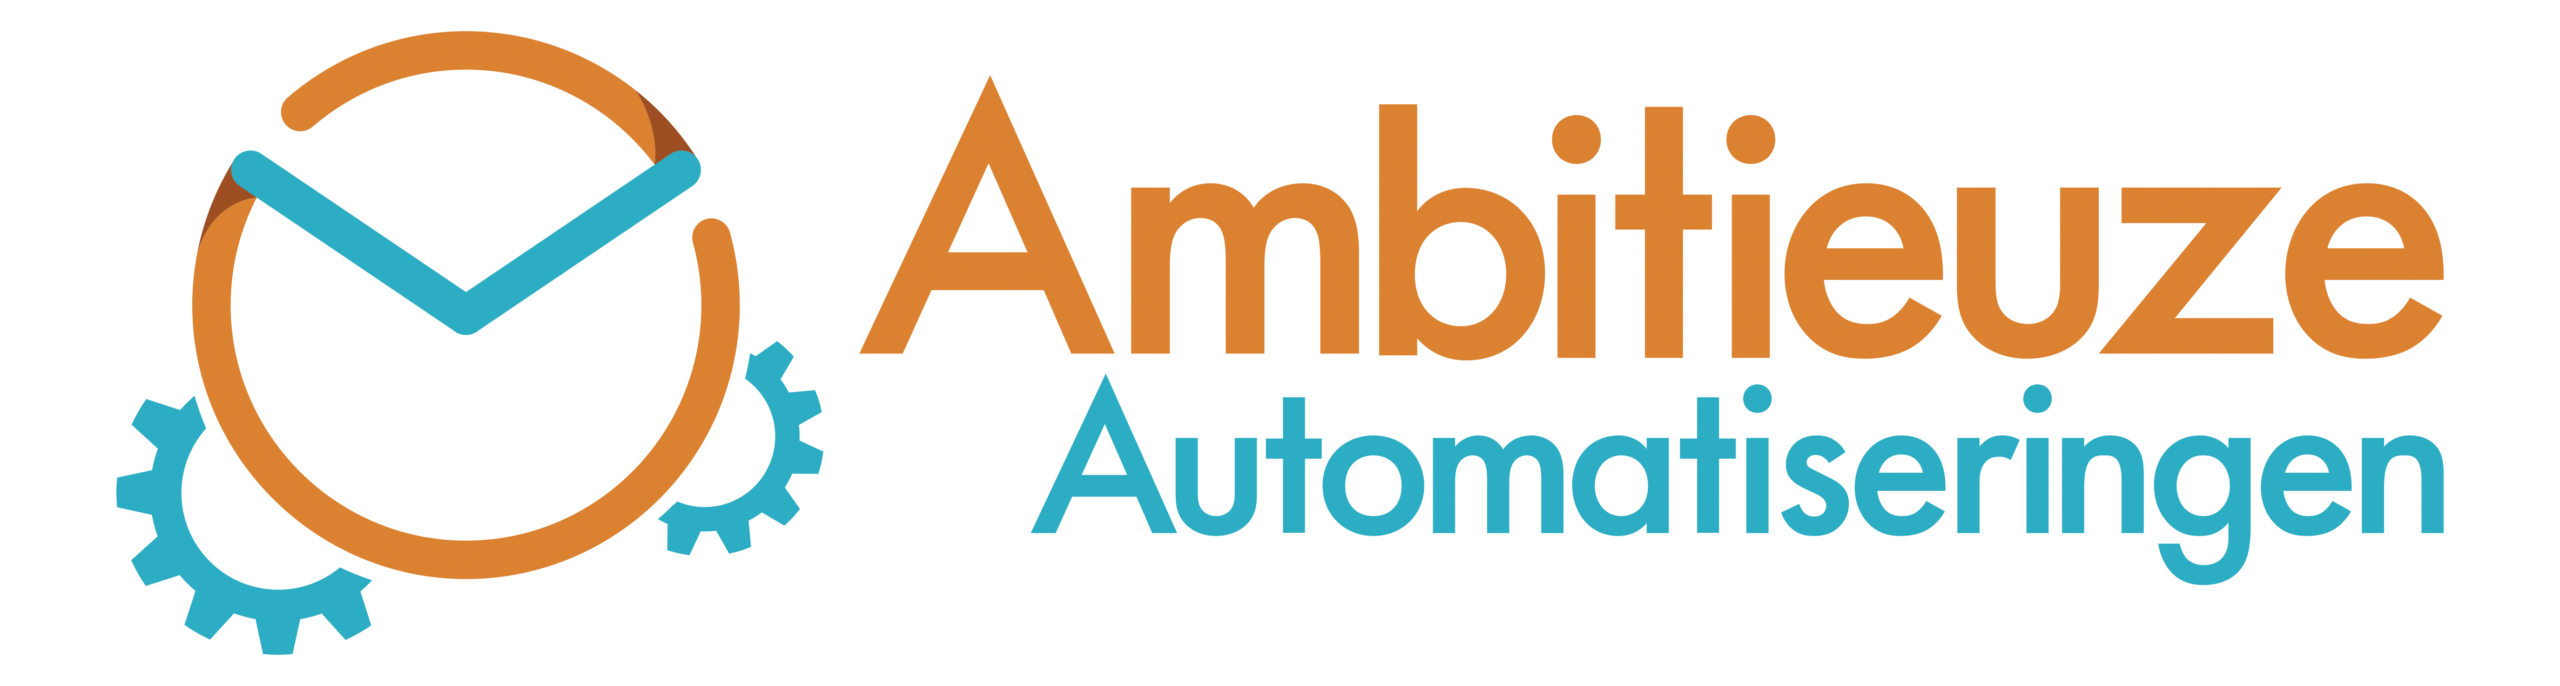 Ambitieuze Automatiseringen